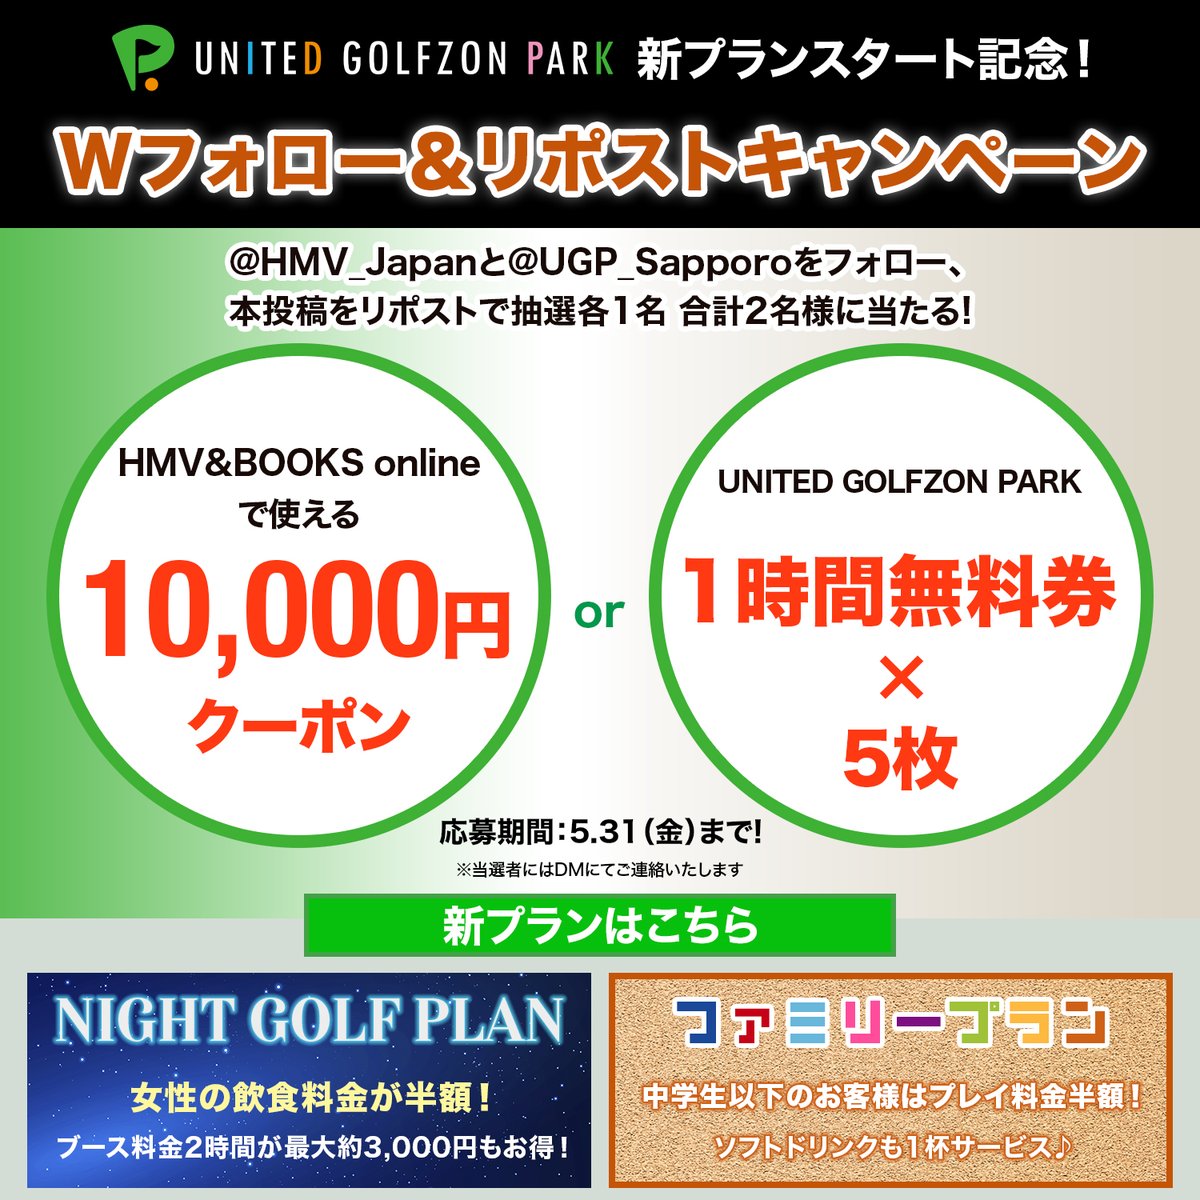 ⛳️UNITED GOLFZON PARK 
📕HMV＆BOOKS
Wフォローキャンペーン🥳

HMV＆BOOKS onlineで使える1万円クーポン、UNITED GOLFZON PARK（札幌）の1時間無料券が抽選で当たる✨

1⃣@HMV_Japanと@UGP_Sapporoをフォロー
2⃣この投稿をリポスト＆欲しい景品をリプライ
⏰5/31(金)〆切

hmv.co.jp/news/article/2…